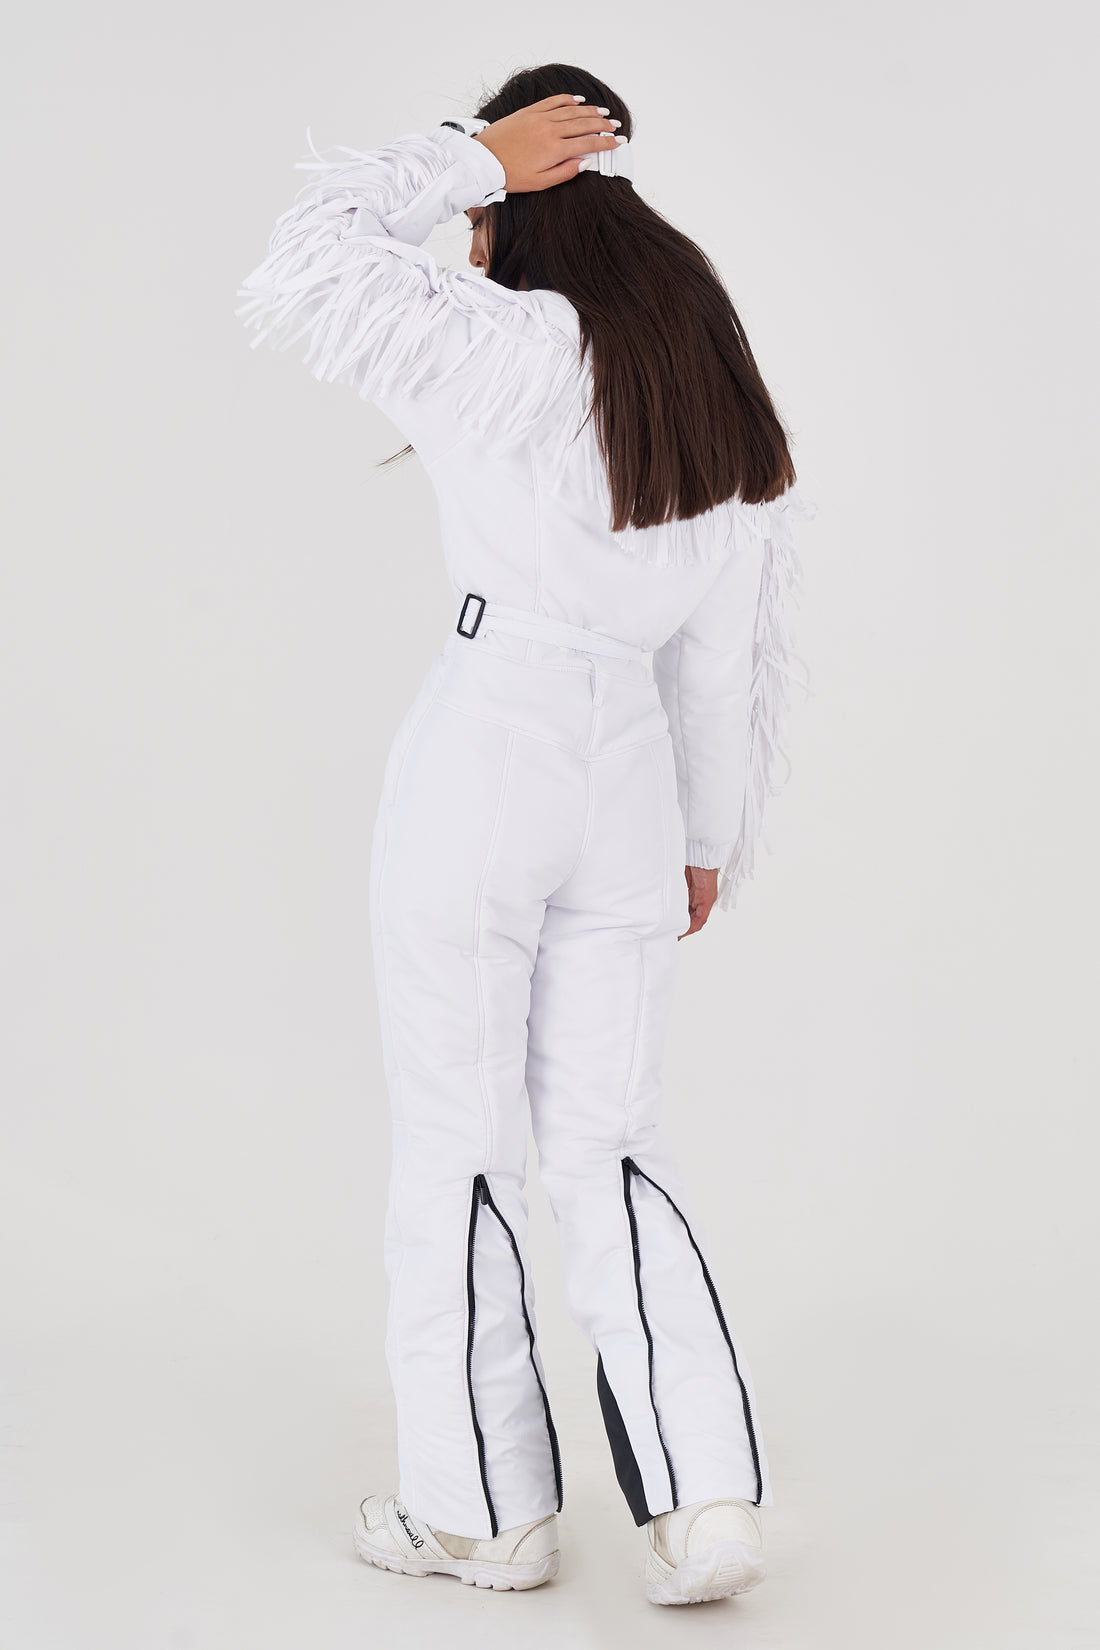 Ski suit stylish - BONA - WHITE fringe - Snowsuit with tassels for winter sport